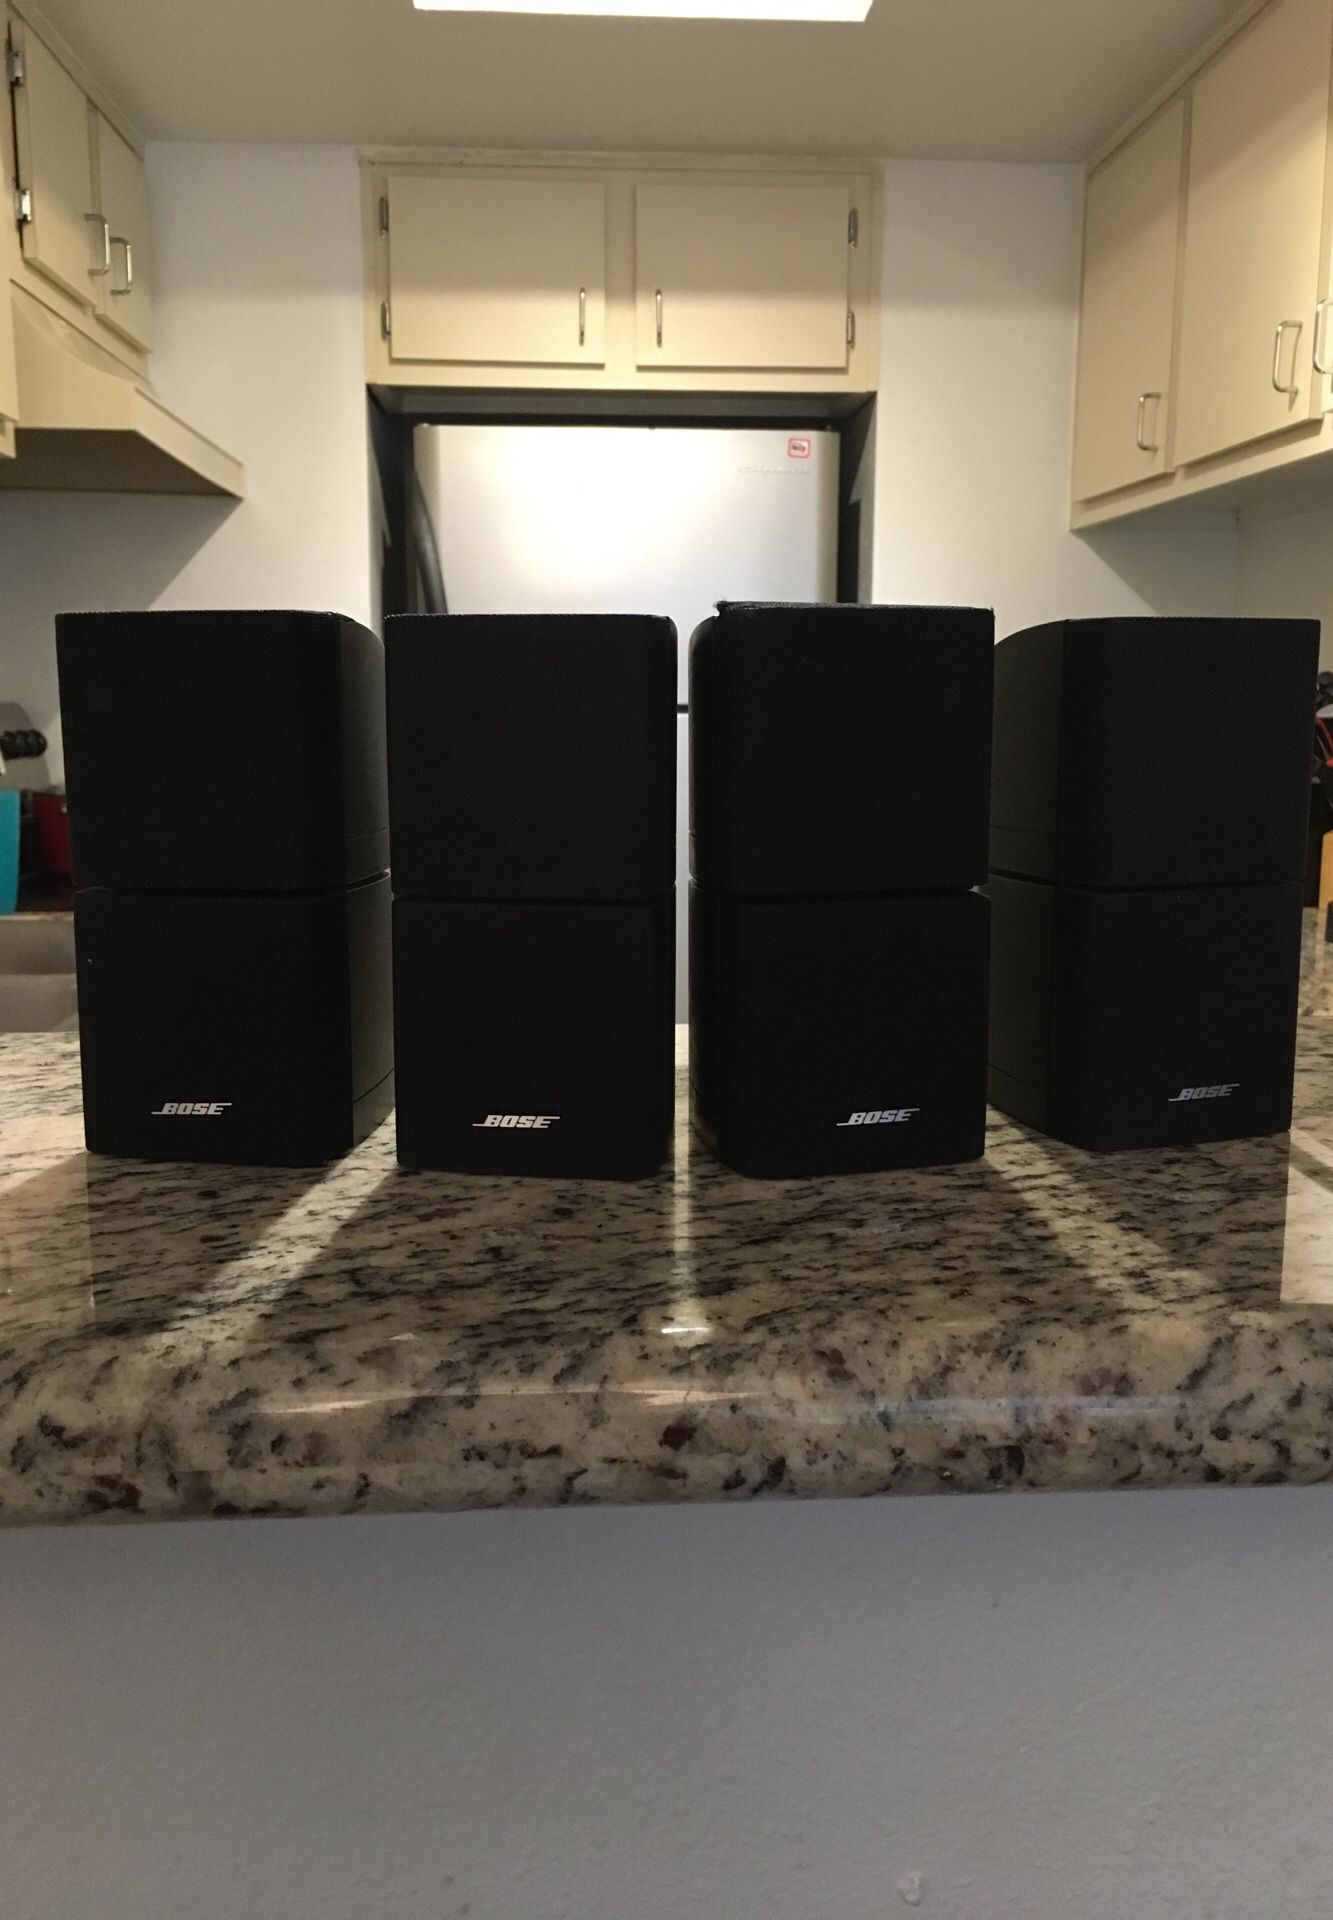 Bose surround sound speakers